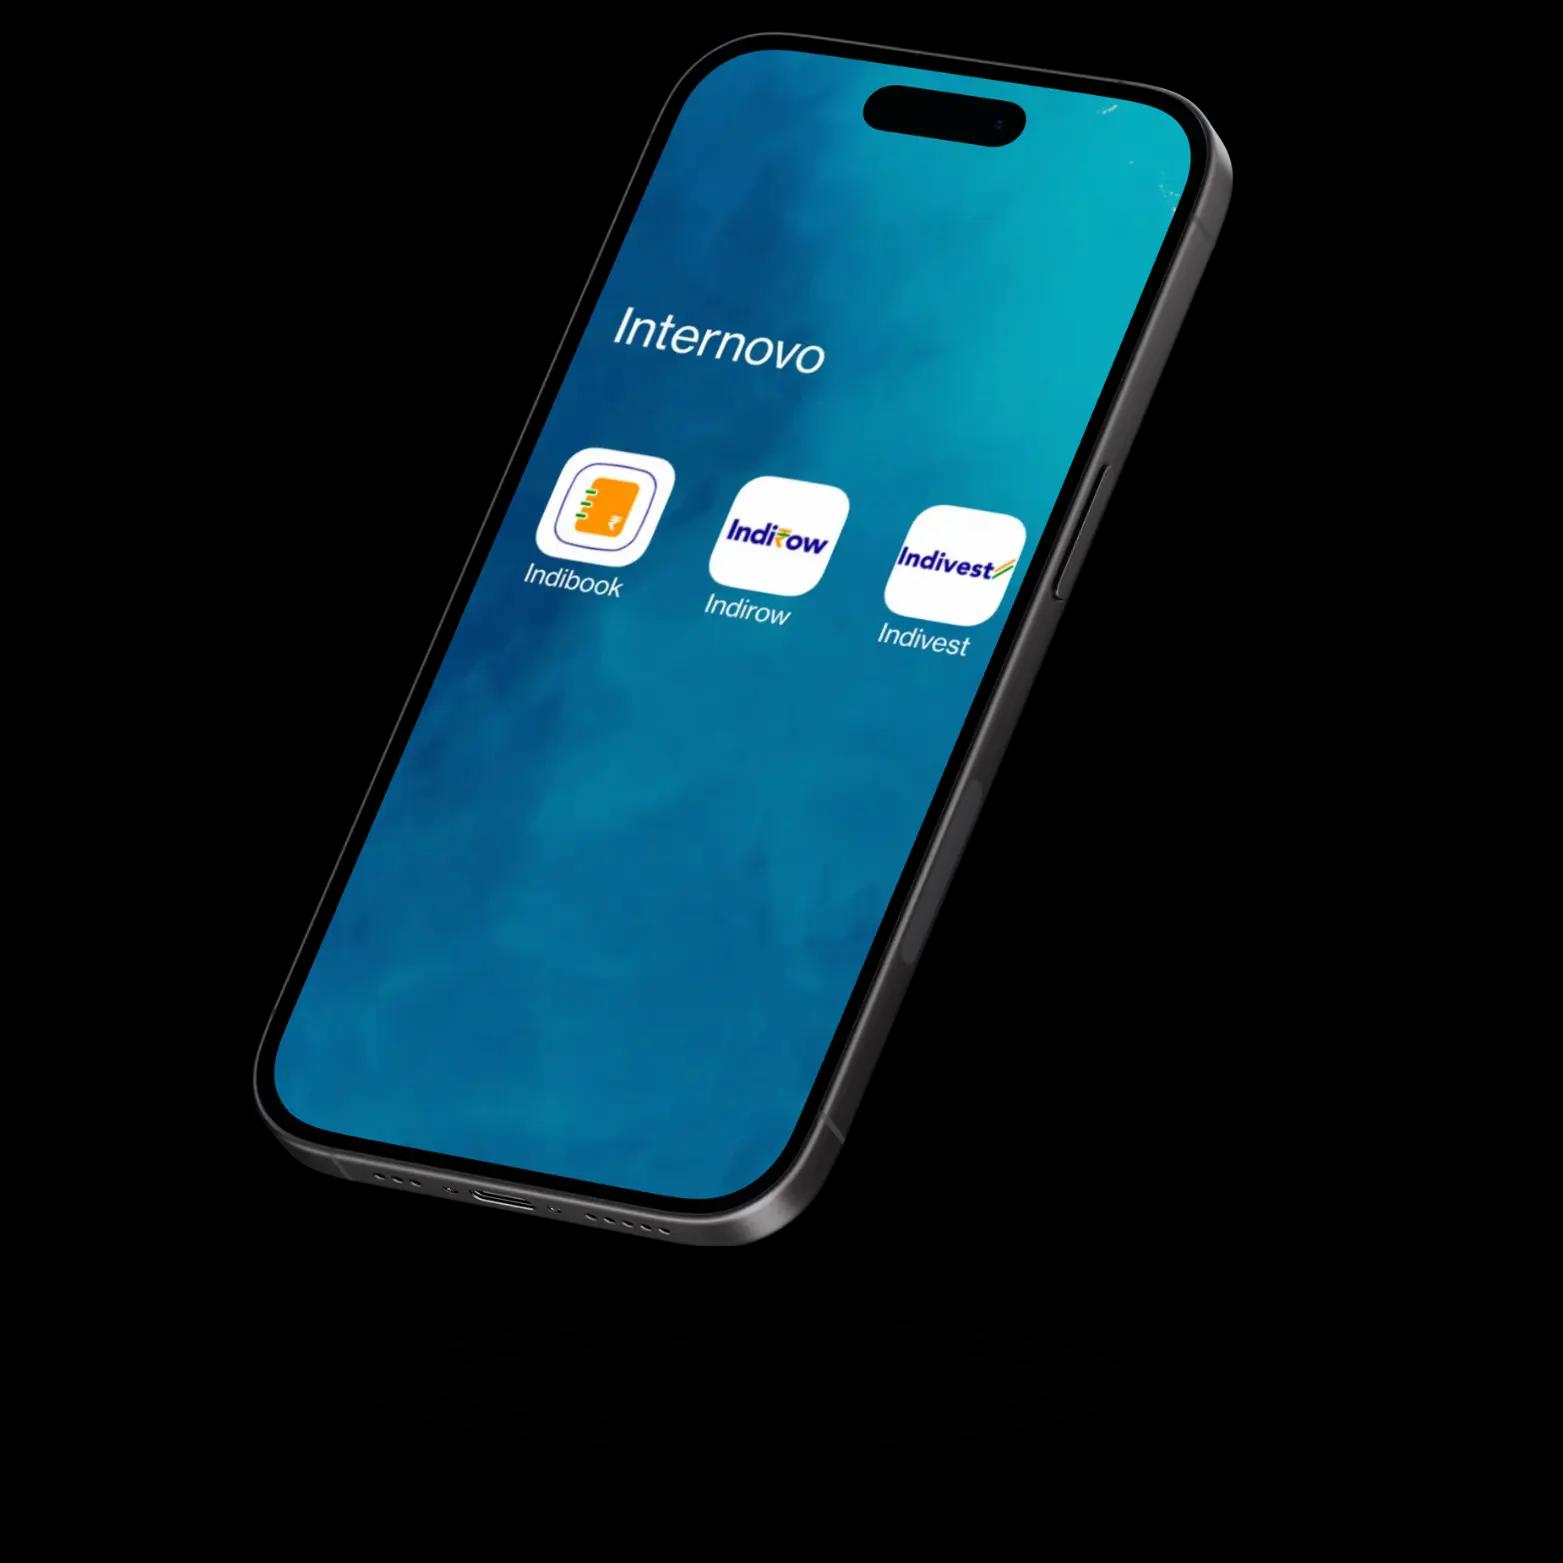 Internovo Phone Screen Apps